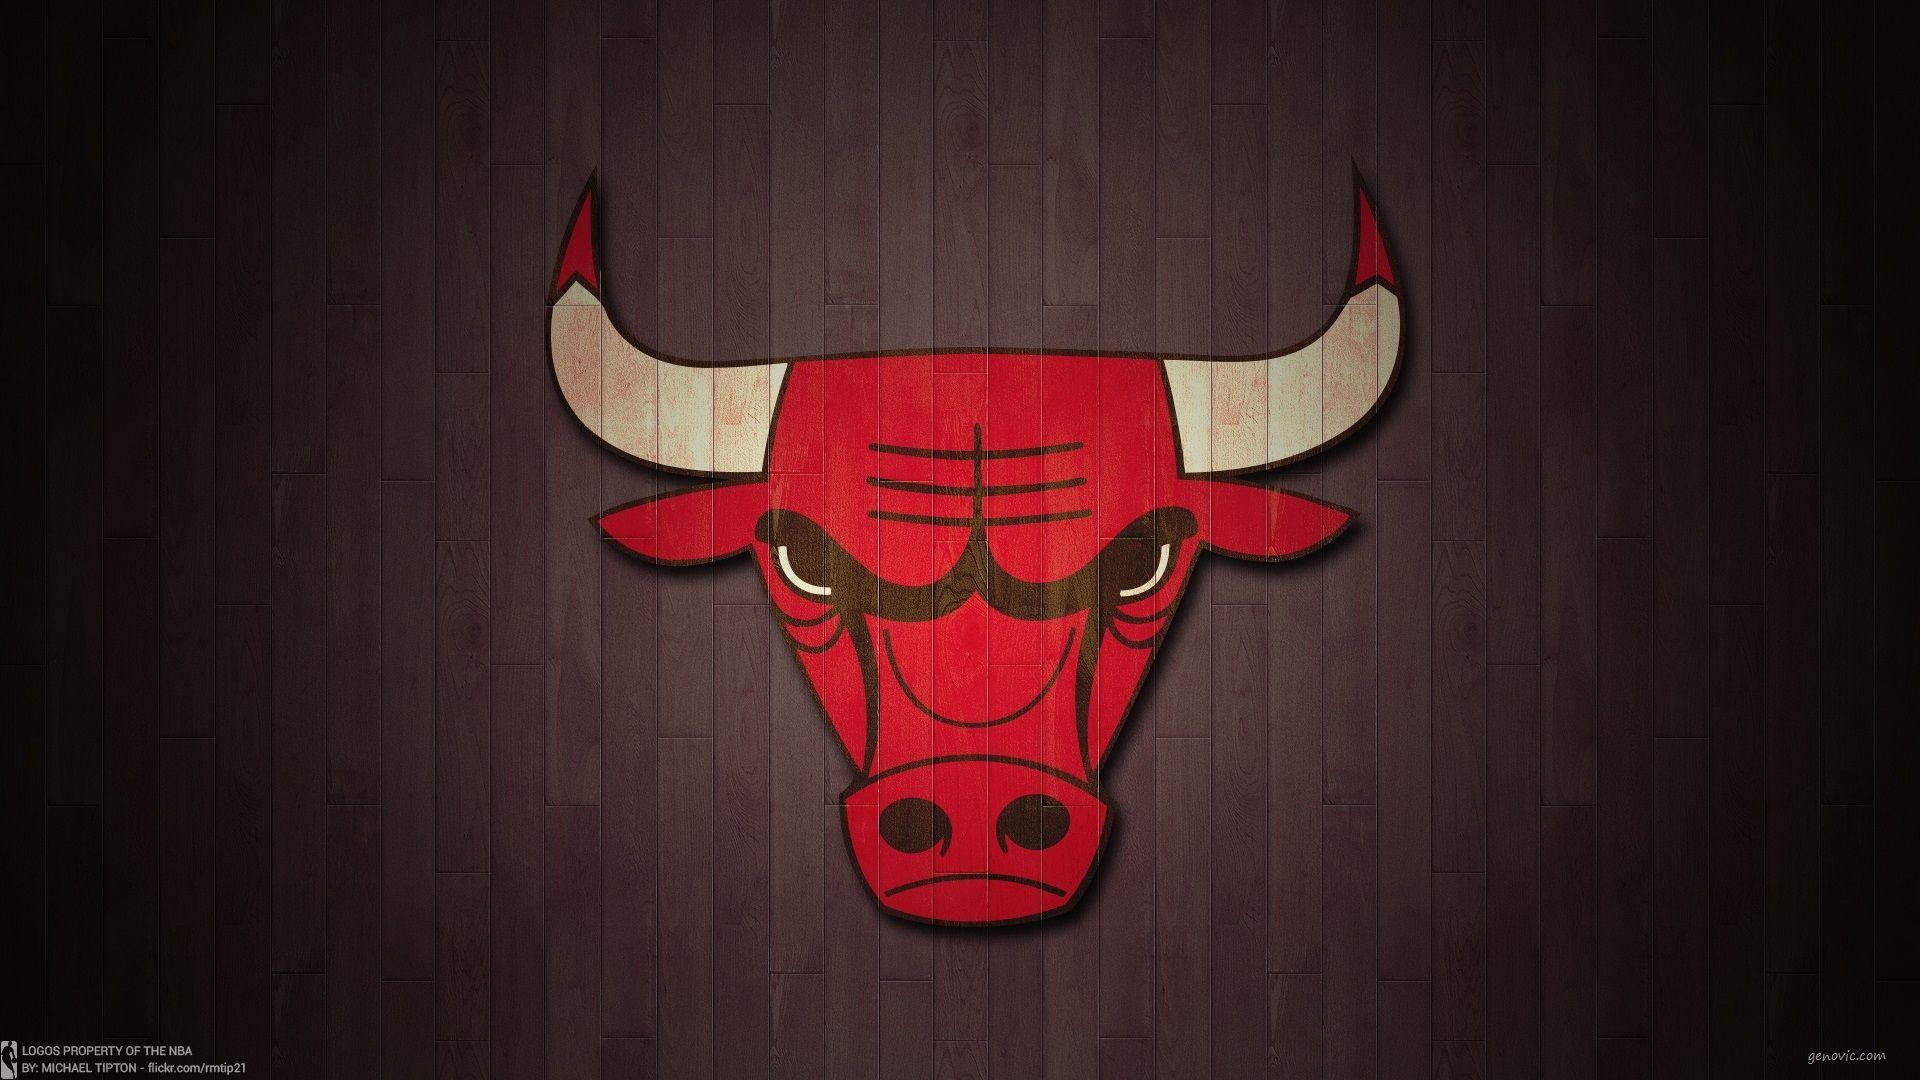 Chicago Bulls Logo Wallpaper HD for iPhone, Laptop, iPad, Mobile .